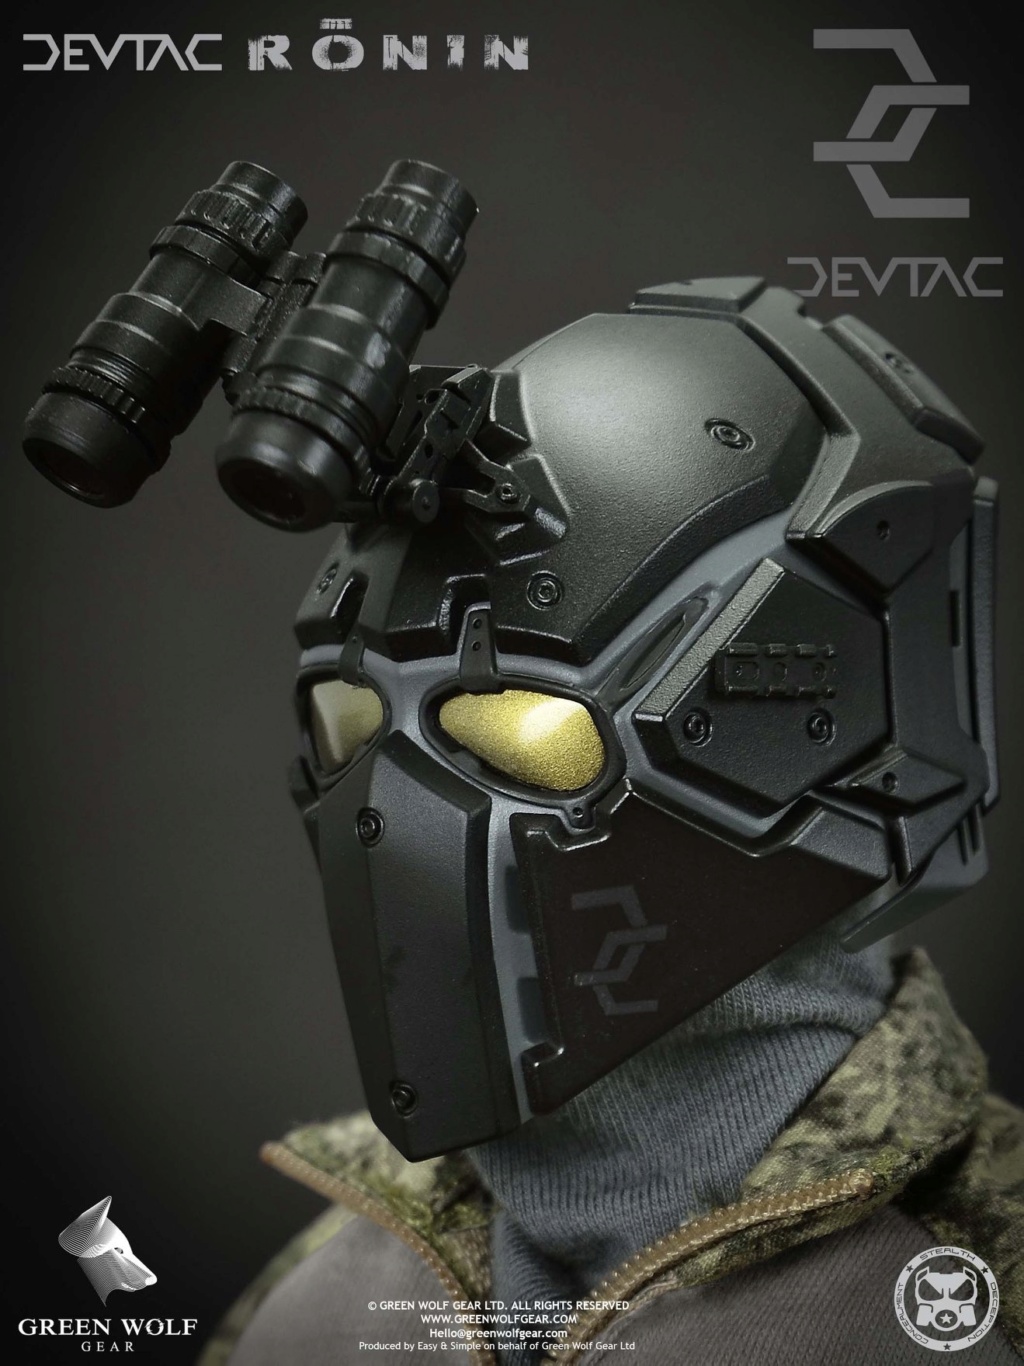 DEVTAC - NEW PRODUCT: Green Wolf Gear DEVTAC Ronin 1/6 Action Figure (VS2434P) 1340